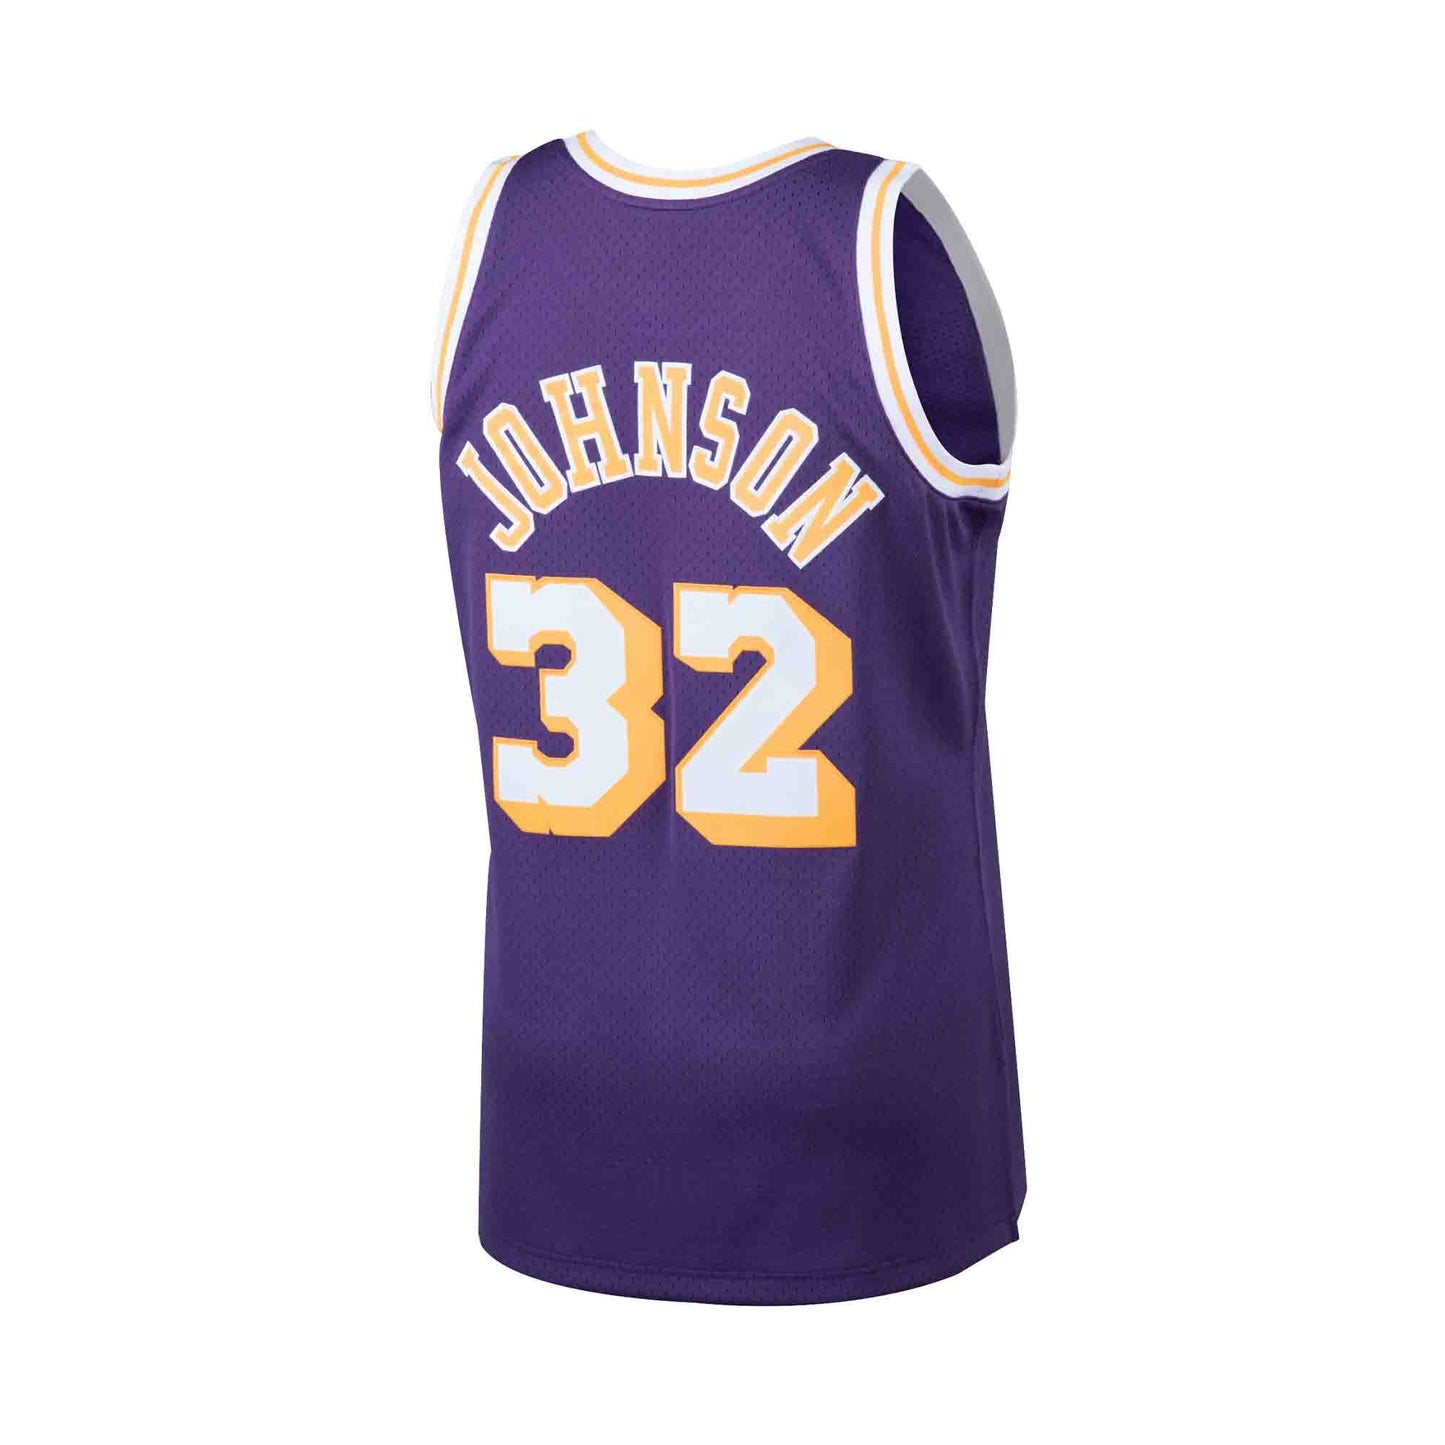 NBA Swingman Jersey Los Angeles Lakers Road 1984-85 Magic Johnson #32